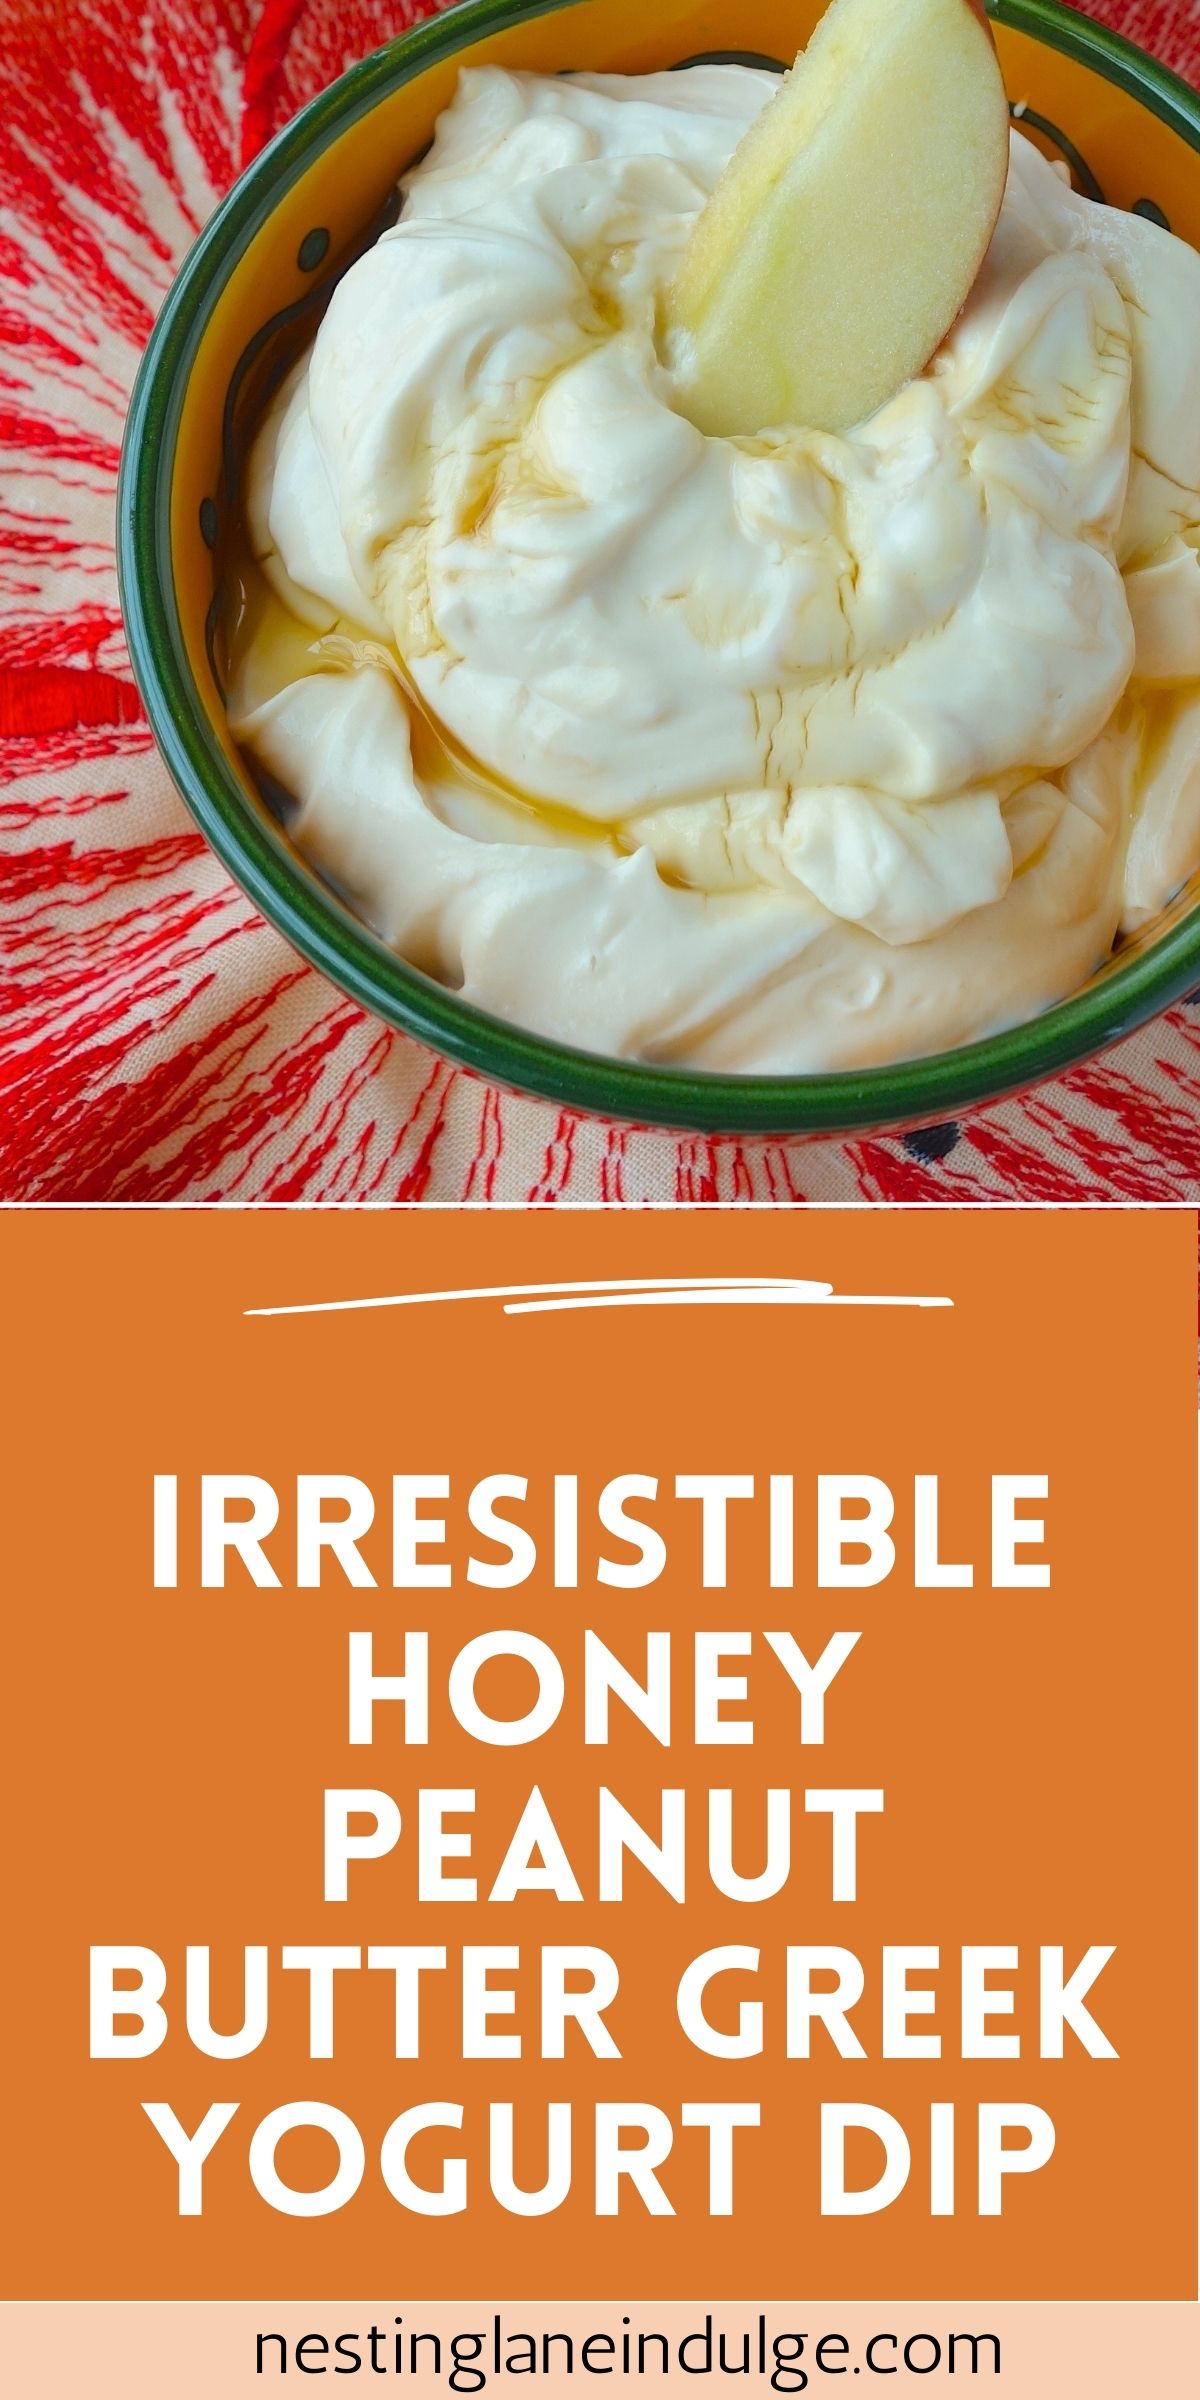 Graphic for Pinterest of Irresistible Honey Peanut Butter Greek Yogurt Dip Recipe.